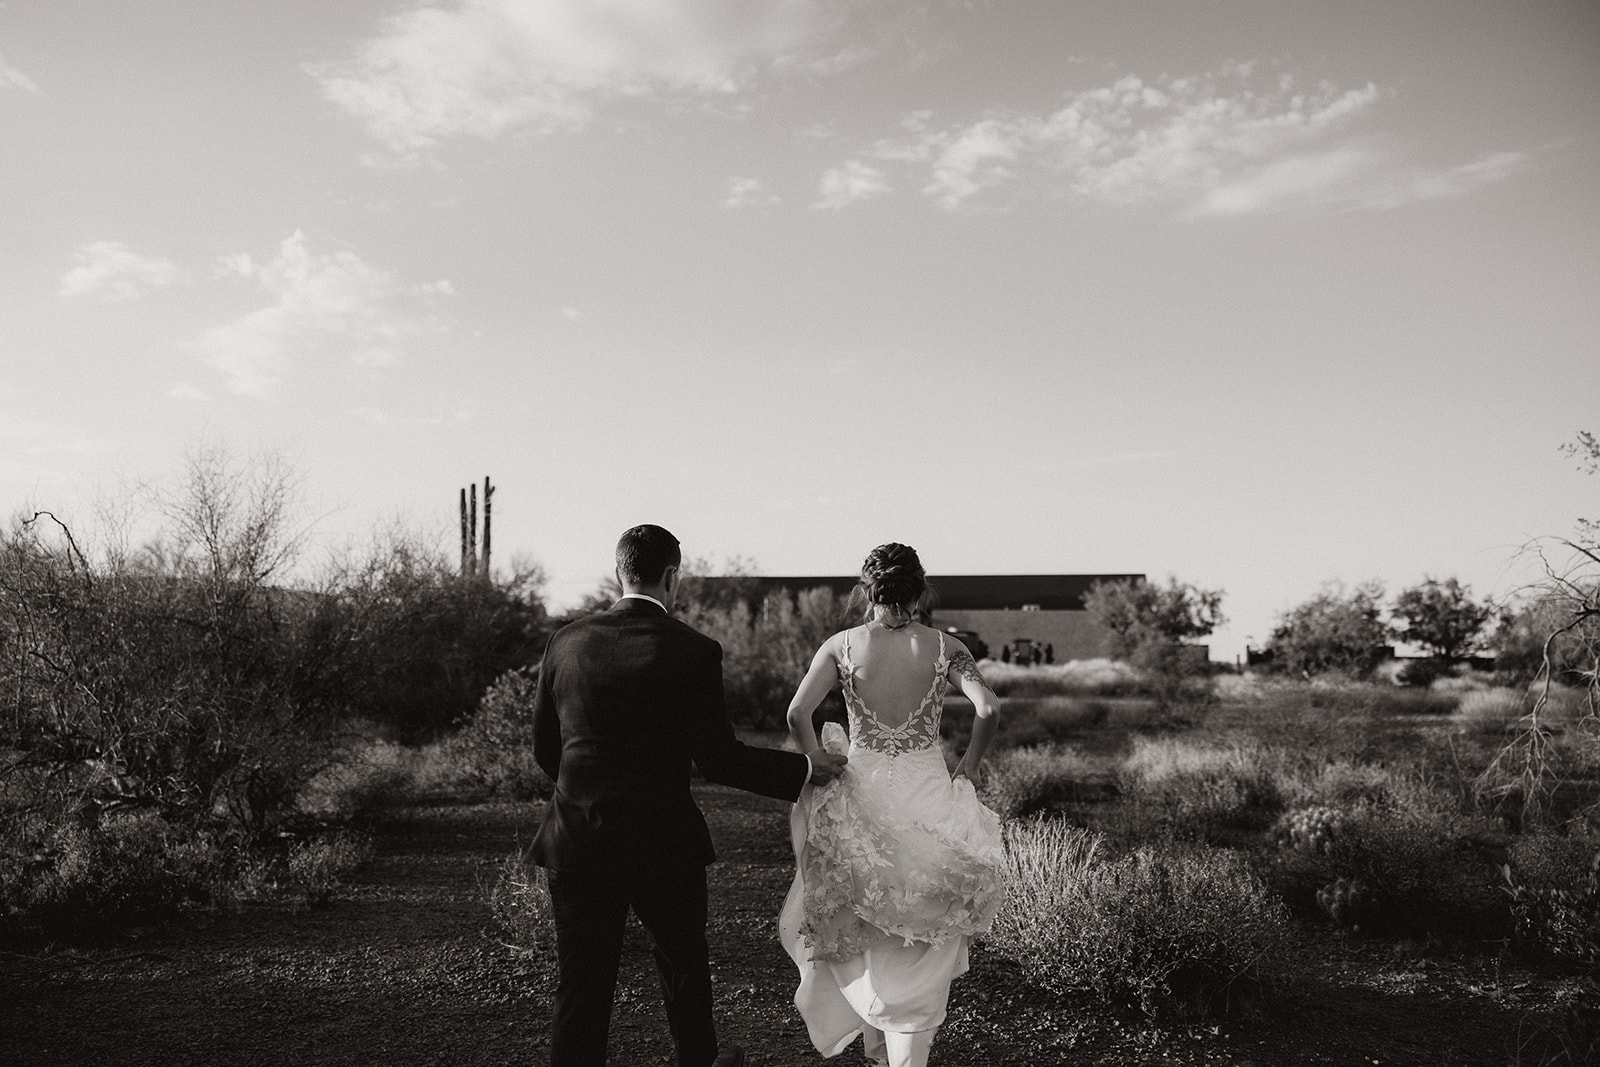 Bride and Groom pose in the desert after their stunning Arizona desert wedding